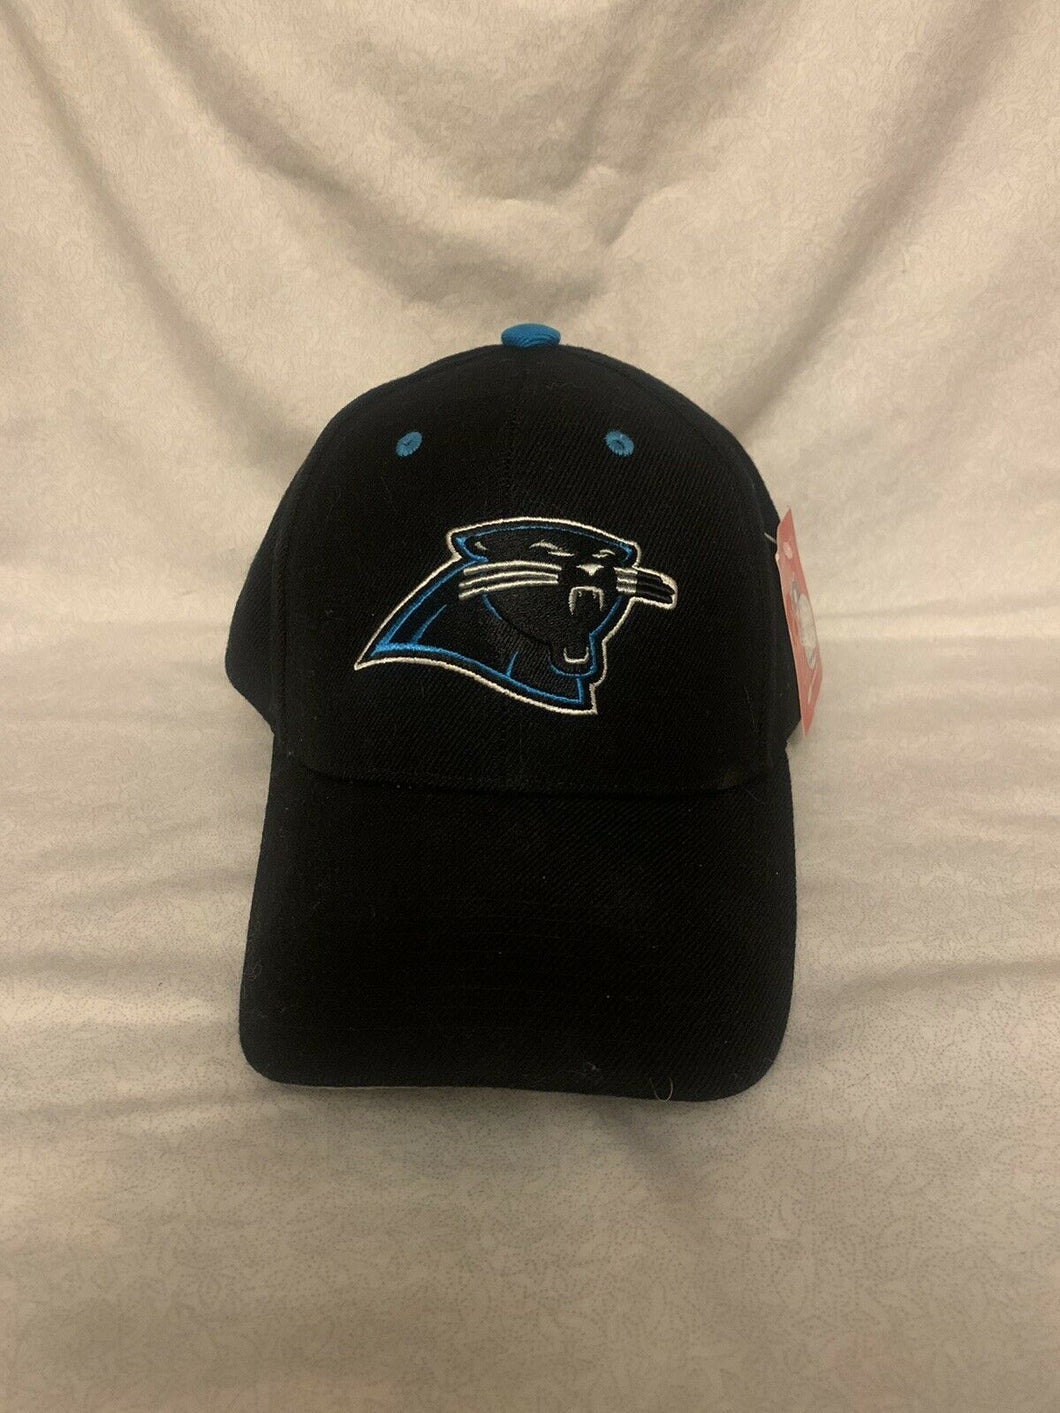 Carolina Panthers NFL Reebok Adjustable One Size Black Hat Cap - Casey's Sports Store